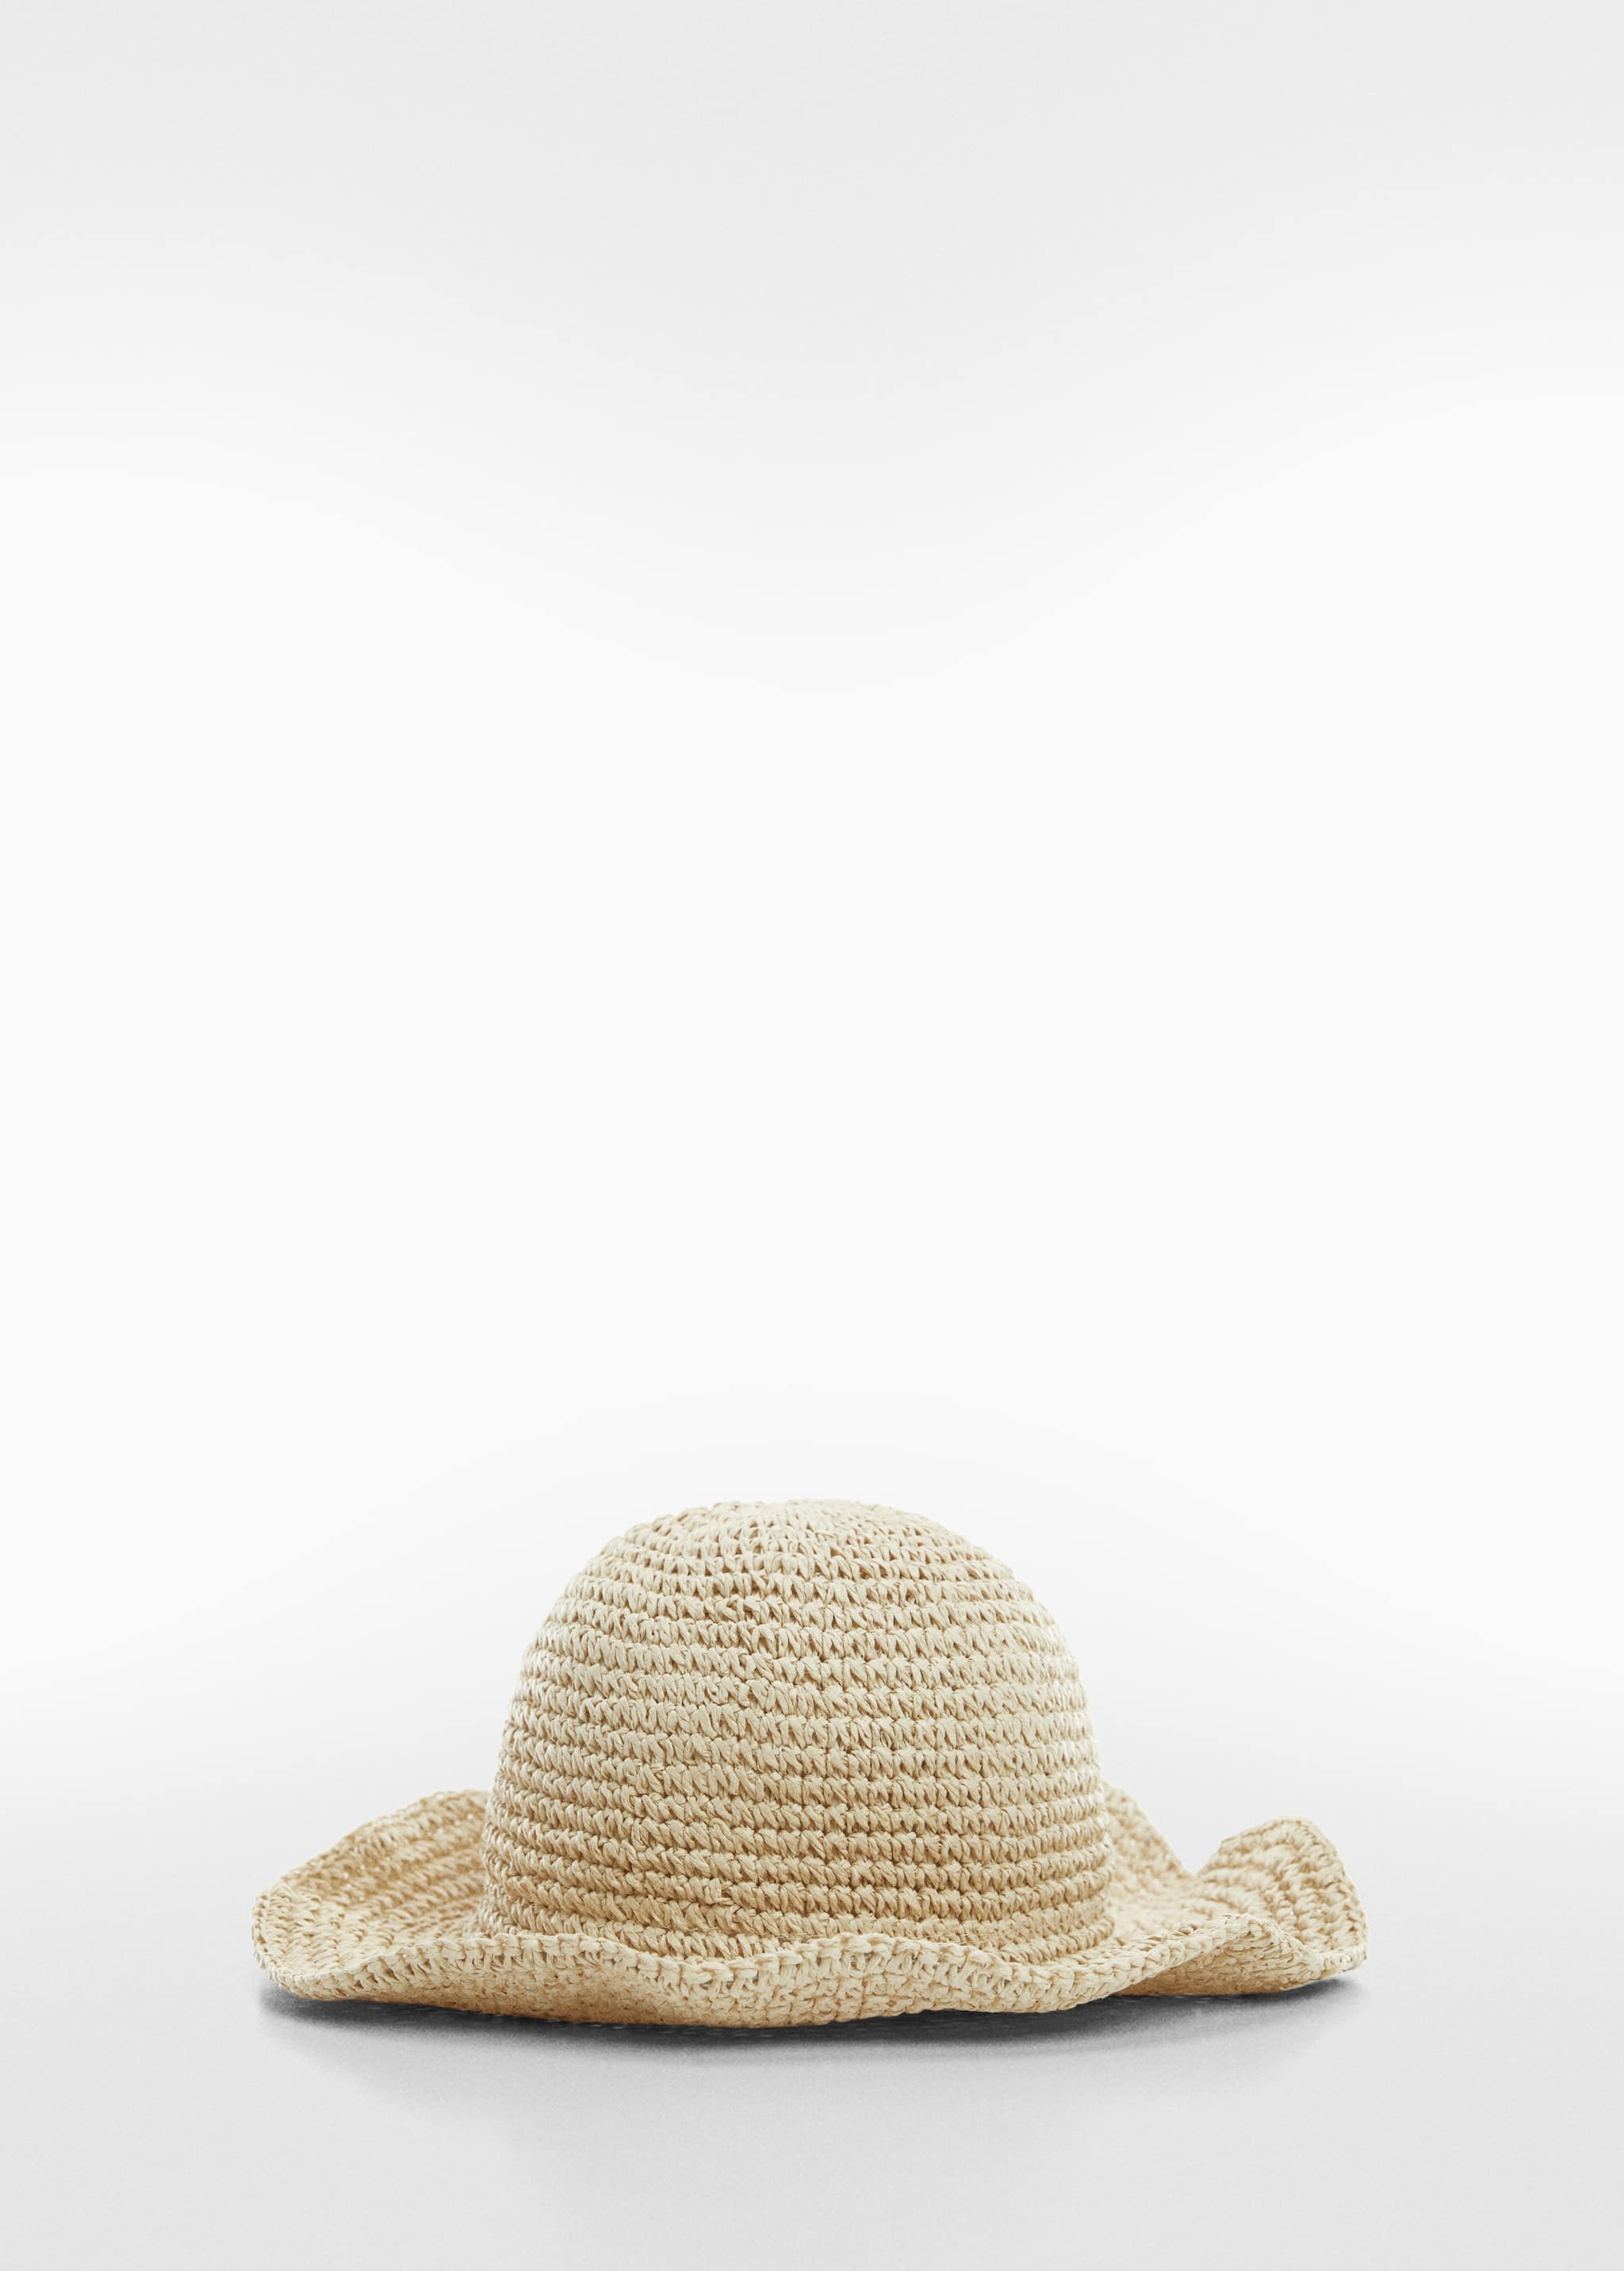 Natural fibre hat - Article without model